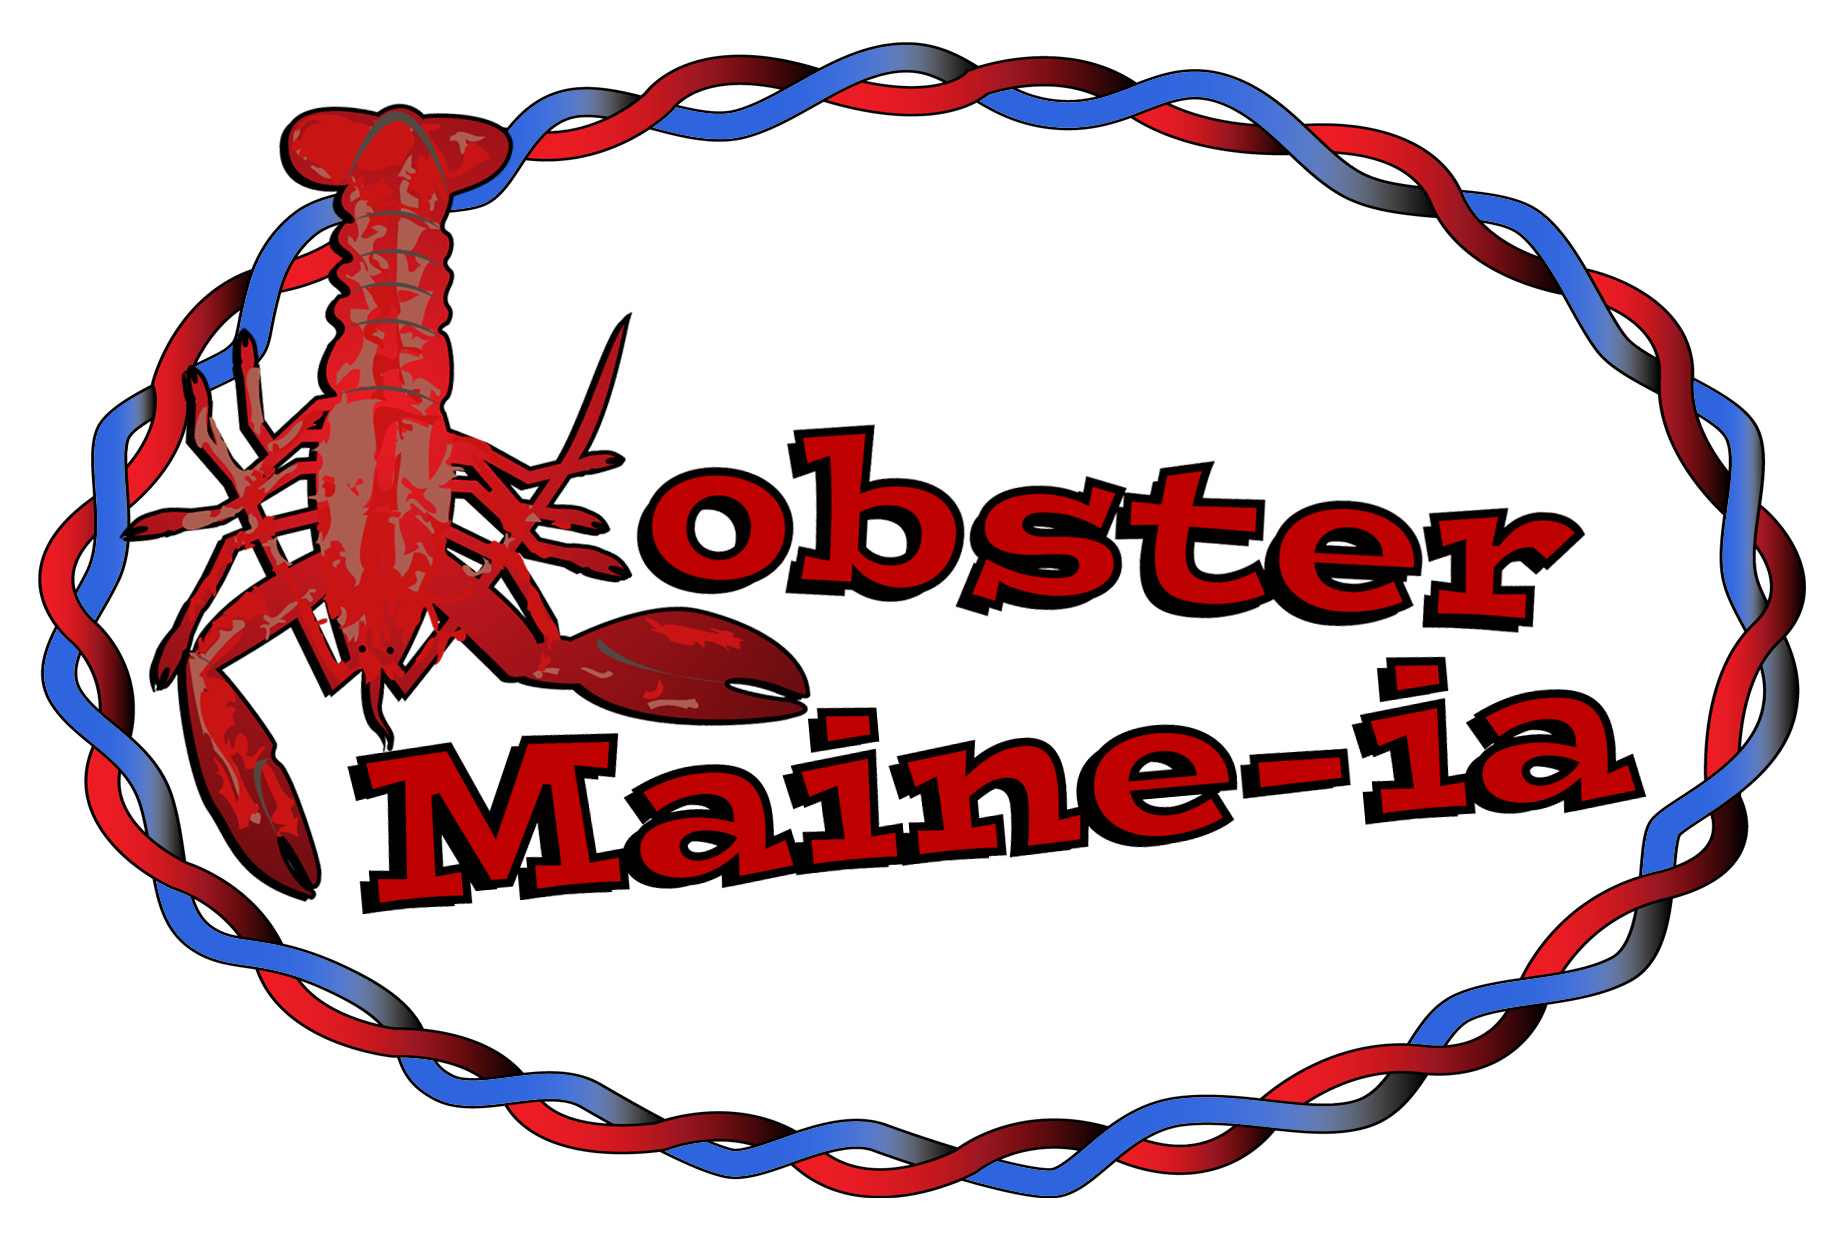 Lobster Maine ia